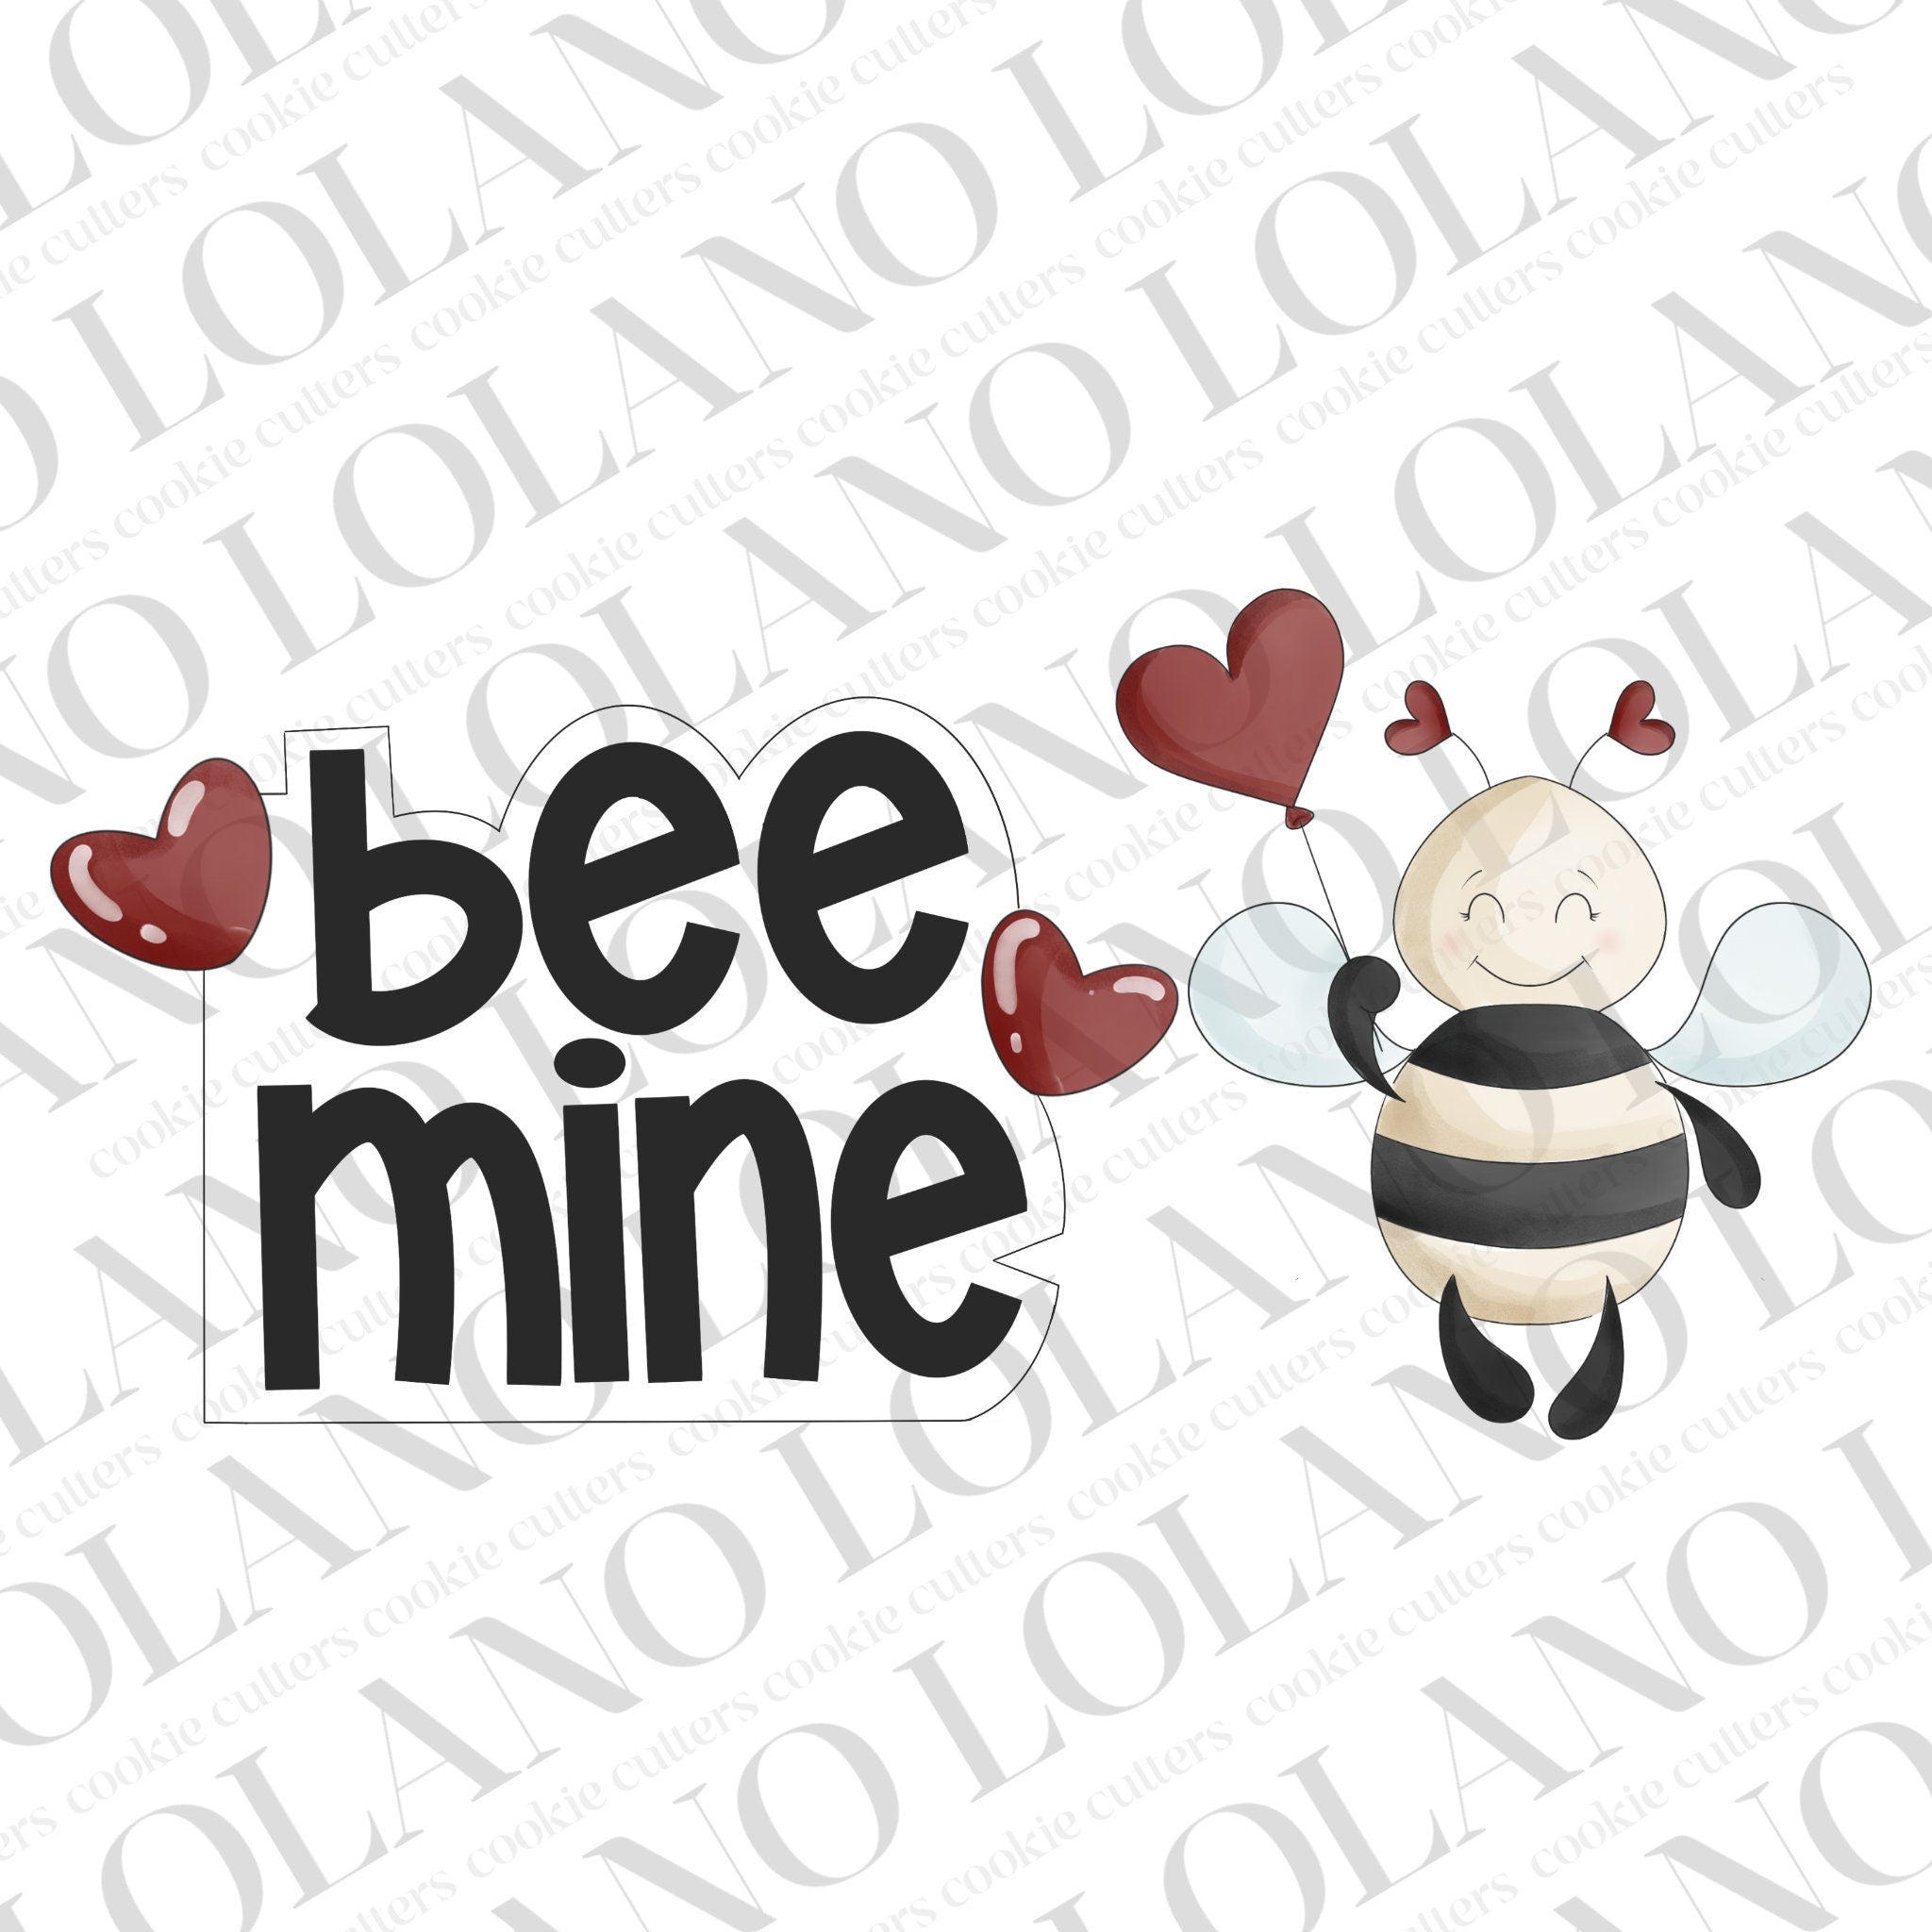 Bee mine Valentine’s Day cookie cutters